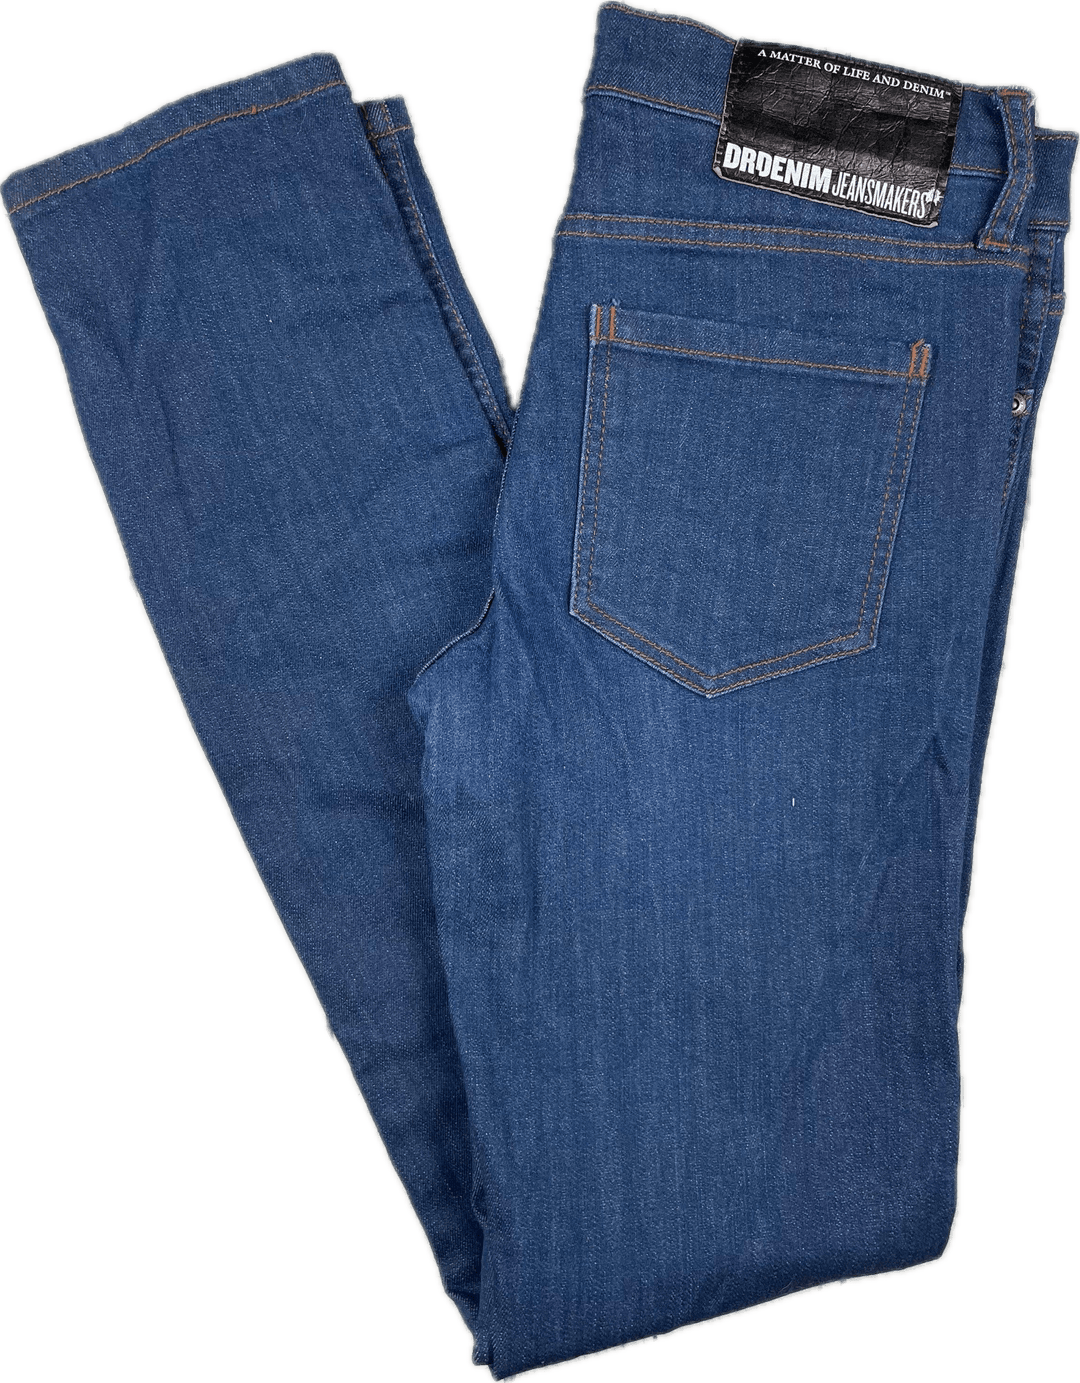 Dr Denim Mid Rise Slim Straight Leg Stretch Jeans - Size 30/32 - Jean Pool